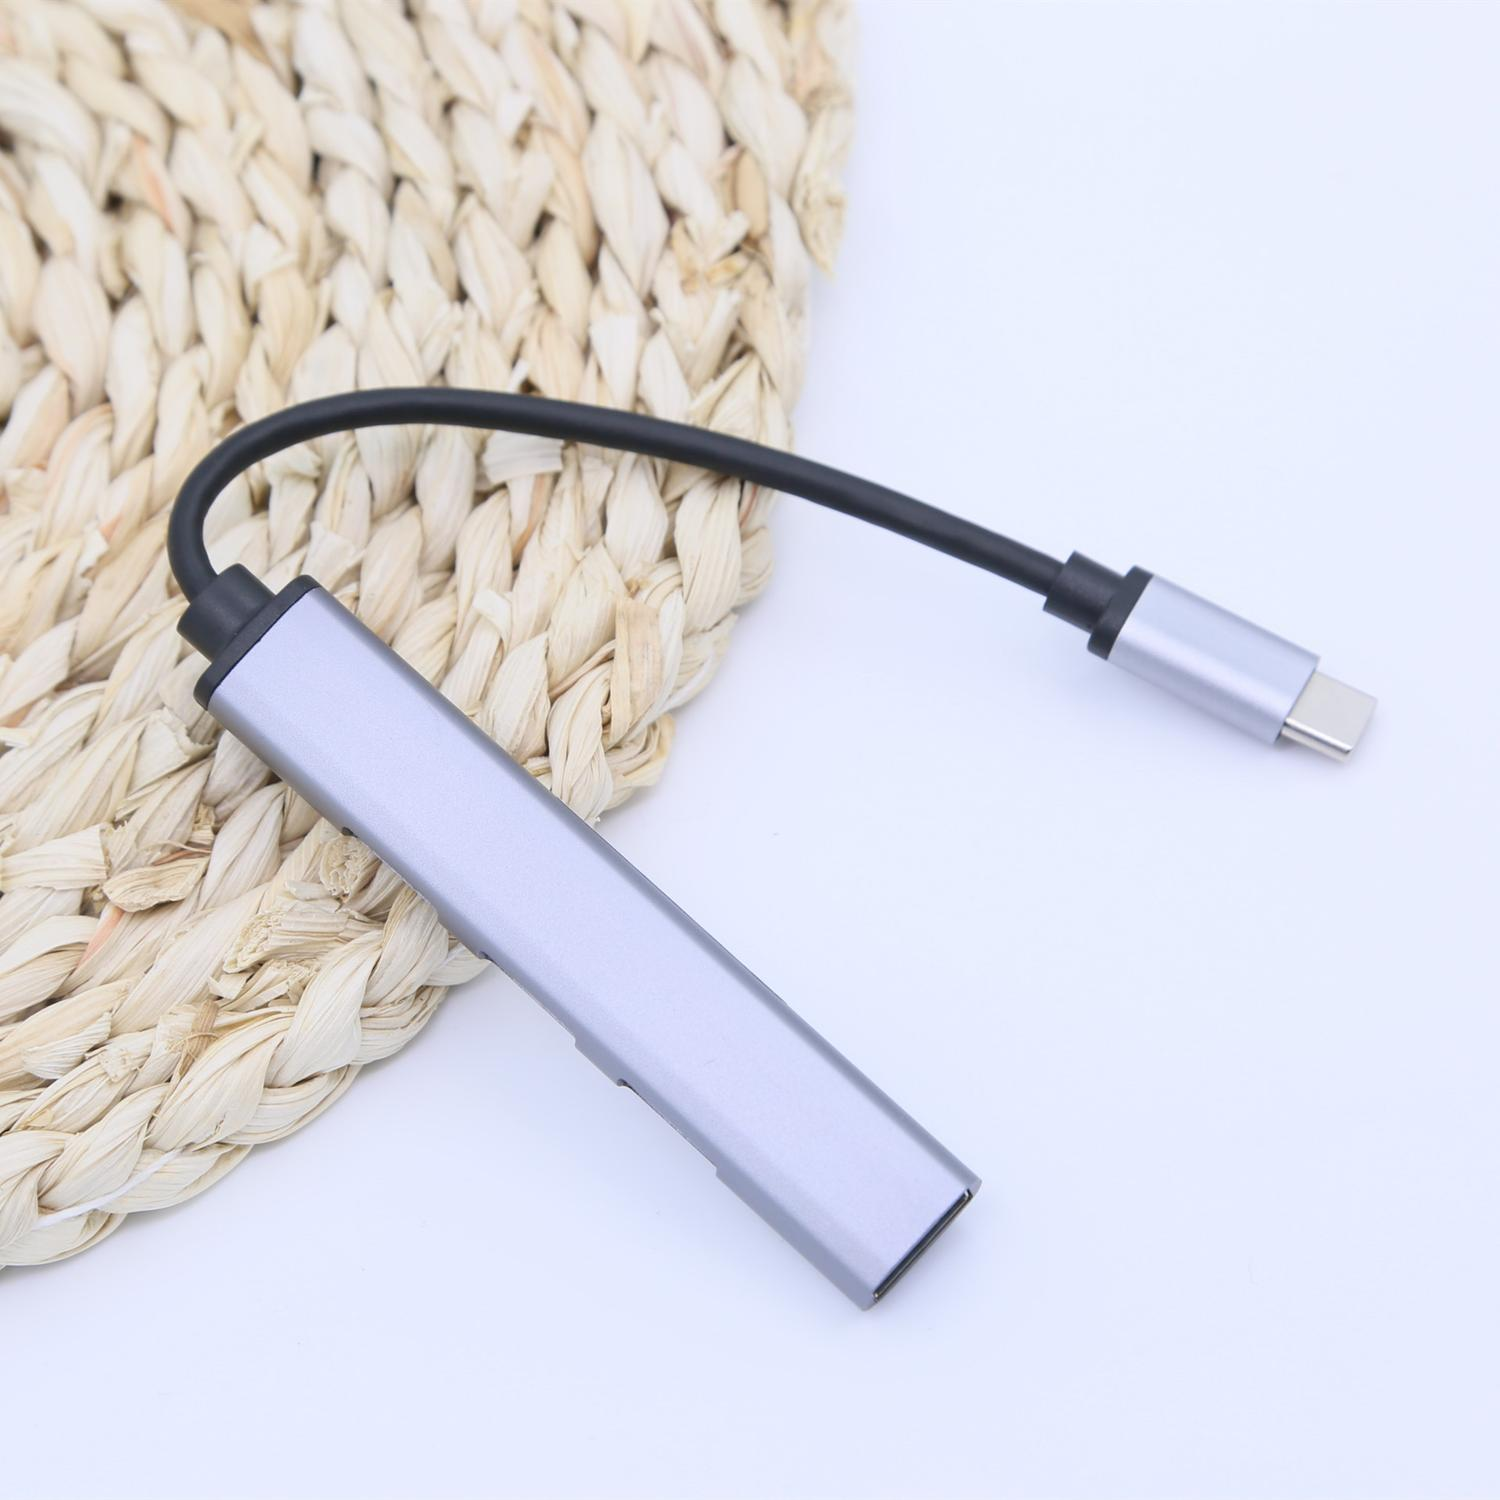 INF USB-Hub Gbit/s Aluminium für USB-C Konverter mit 5 4 USB-Anschlüssen